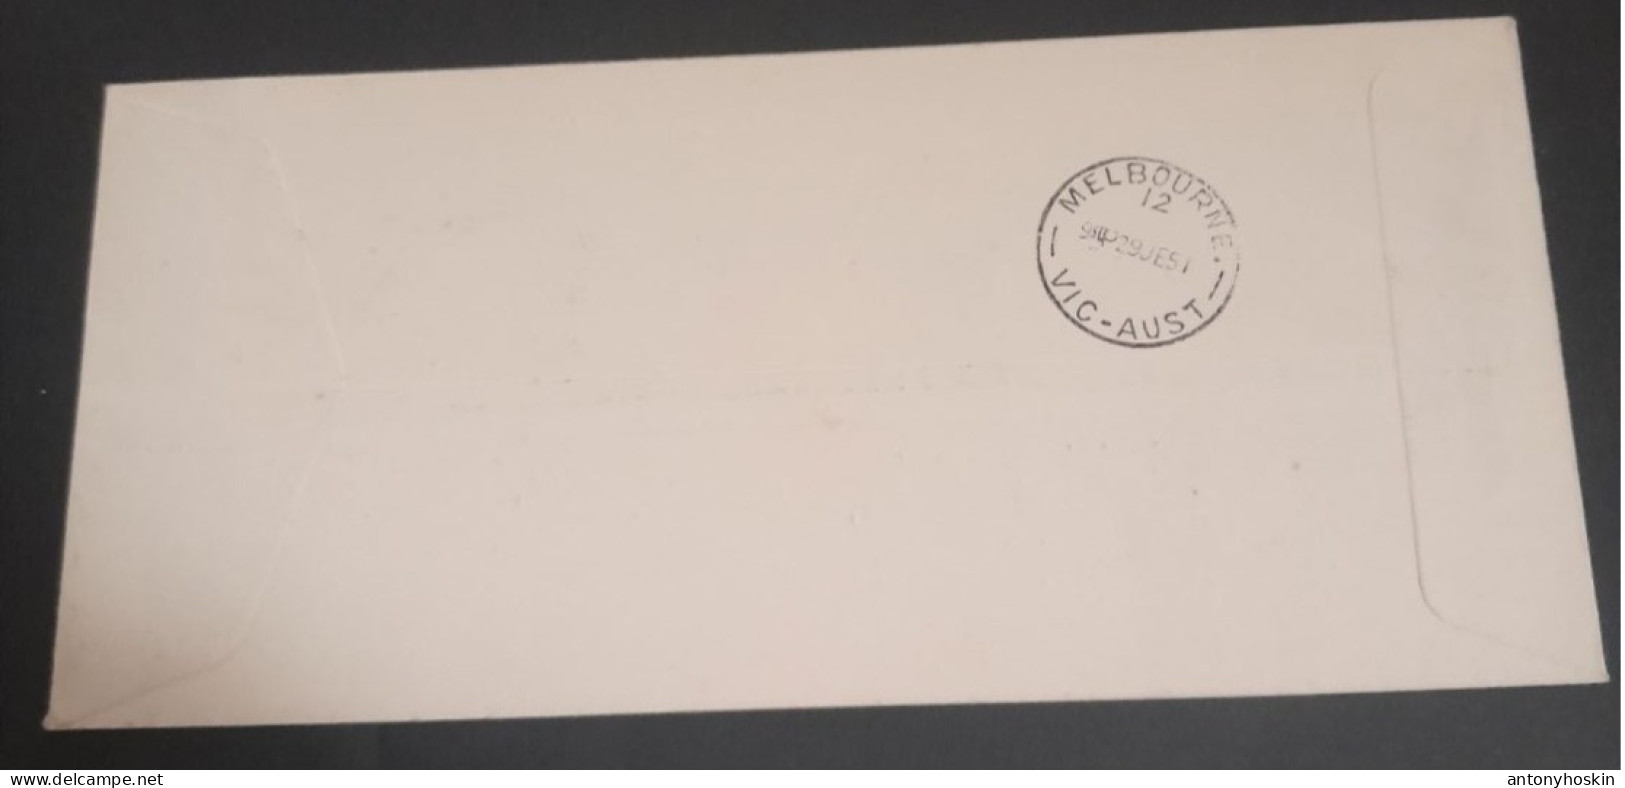 29 June 1951 First Official Direct Air Mail Christchurch  -Melbourne. - Luftpost